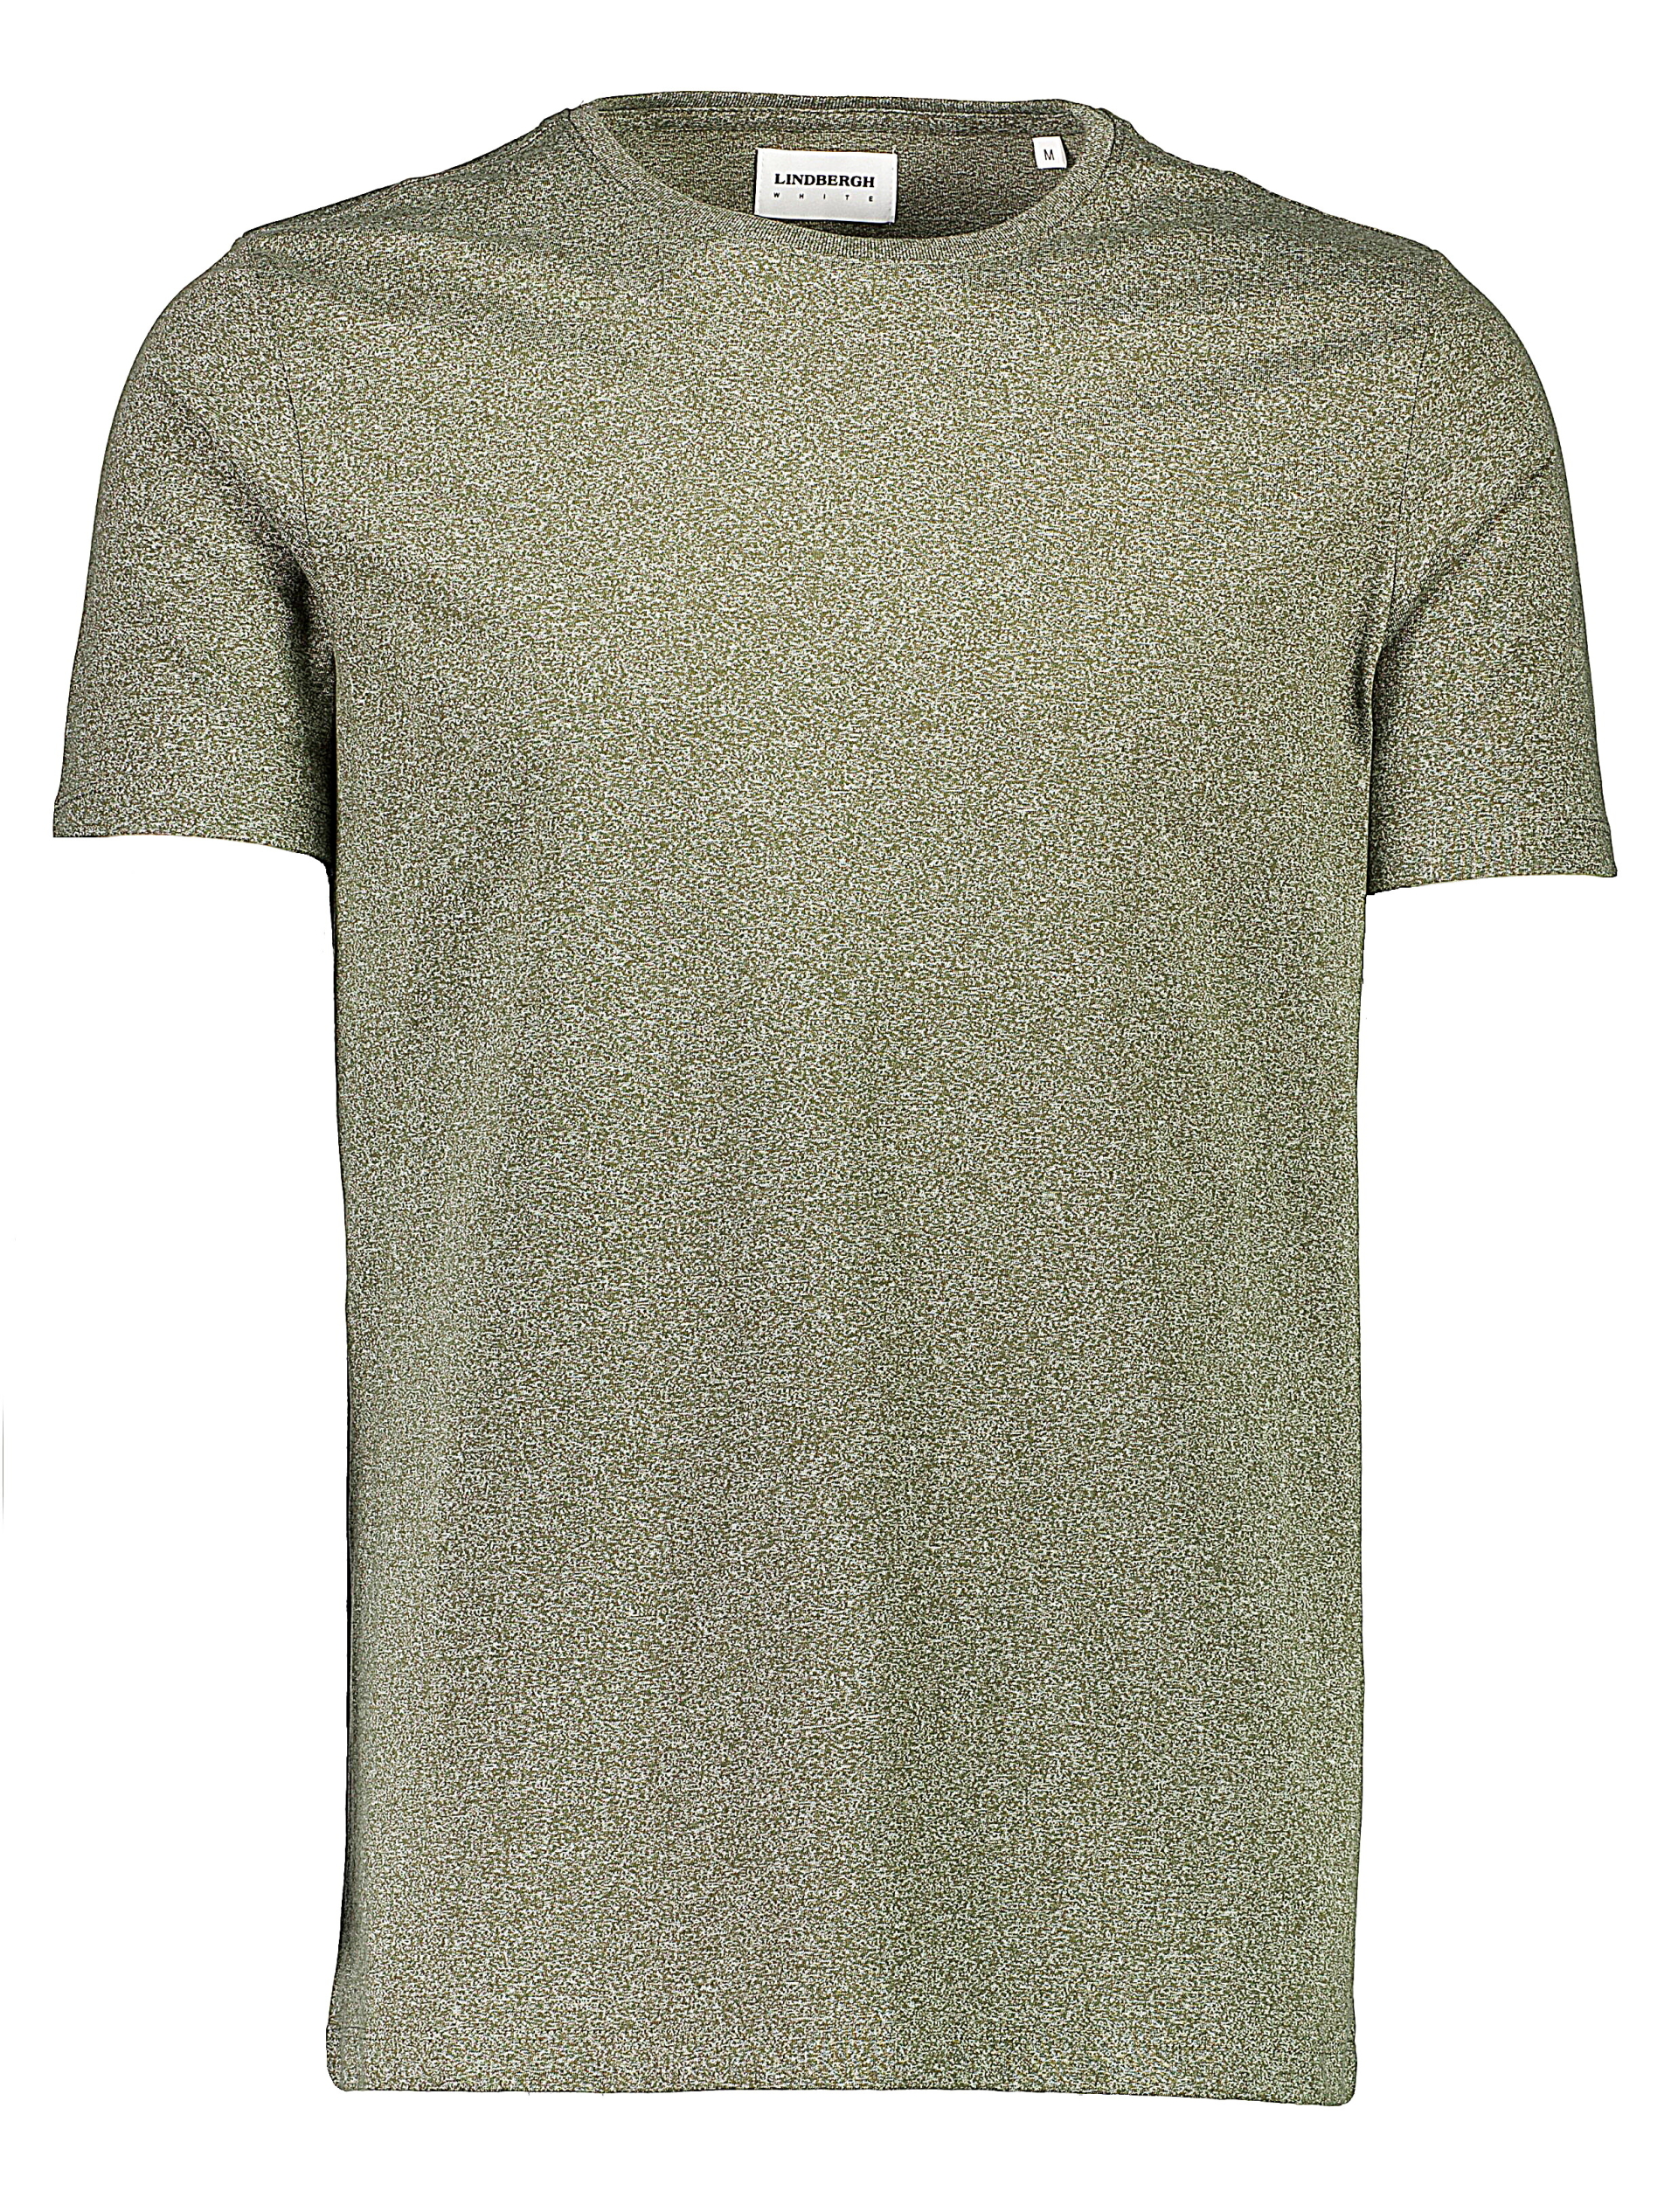 Lindbergh T-shirt grøn / deep army mix